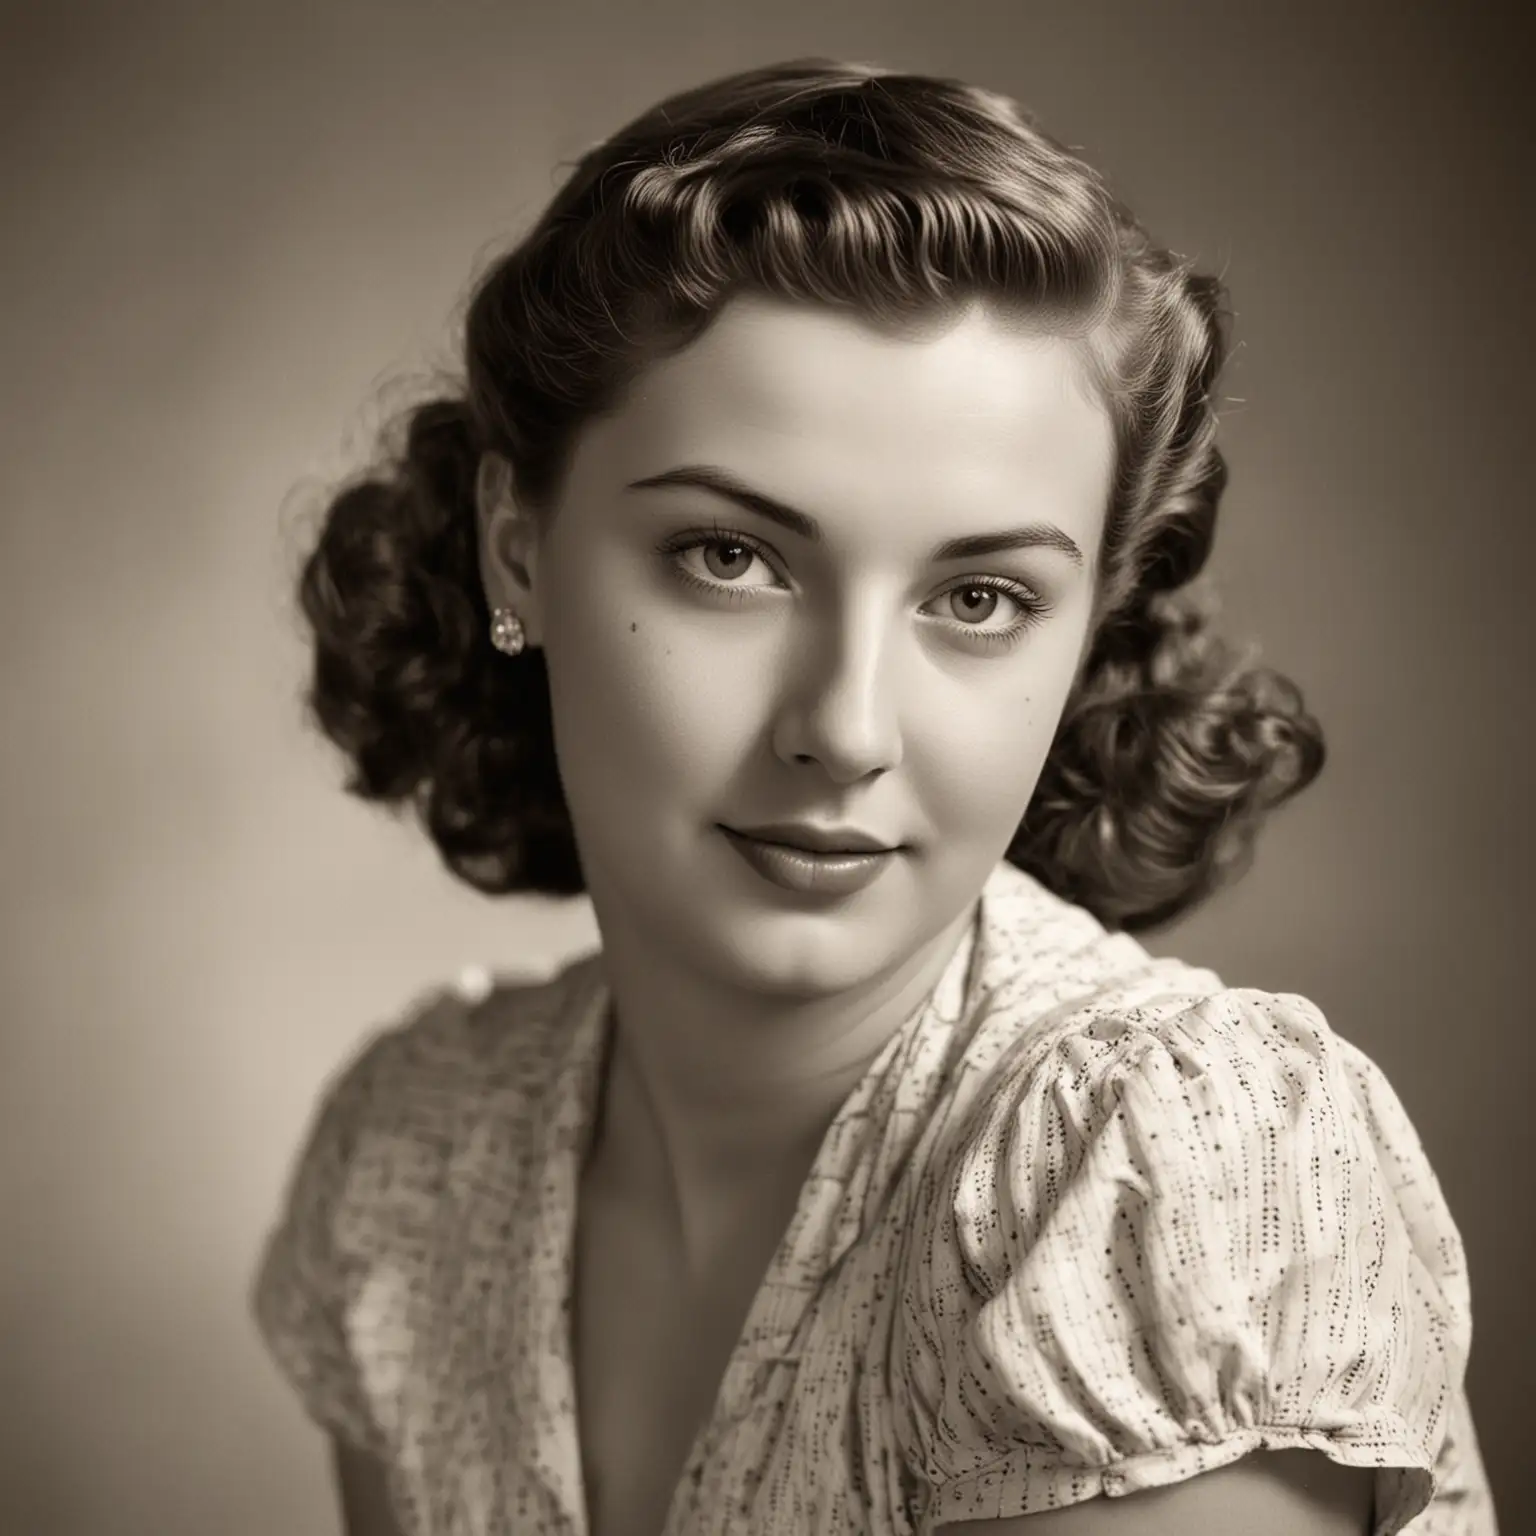 Elegant Vintage Woman Portrait from the 1940s